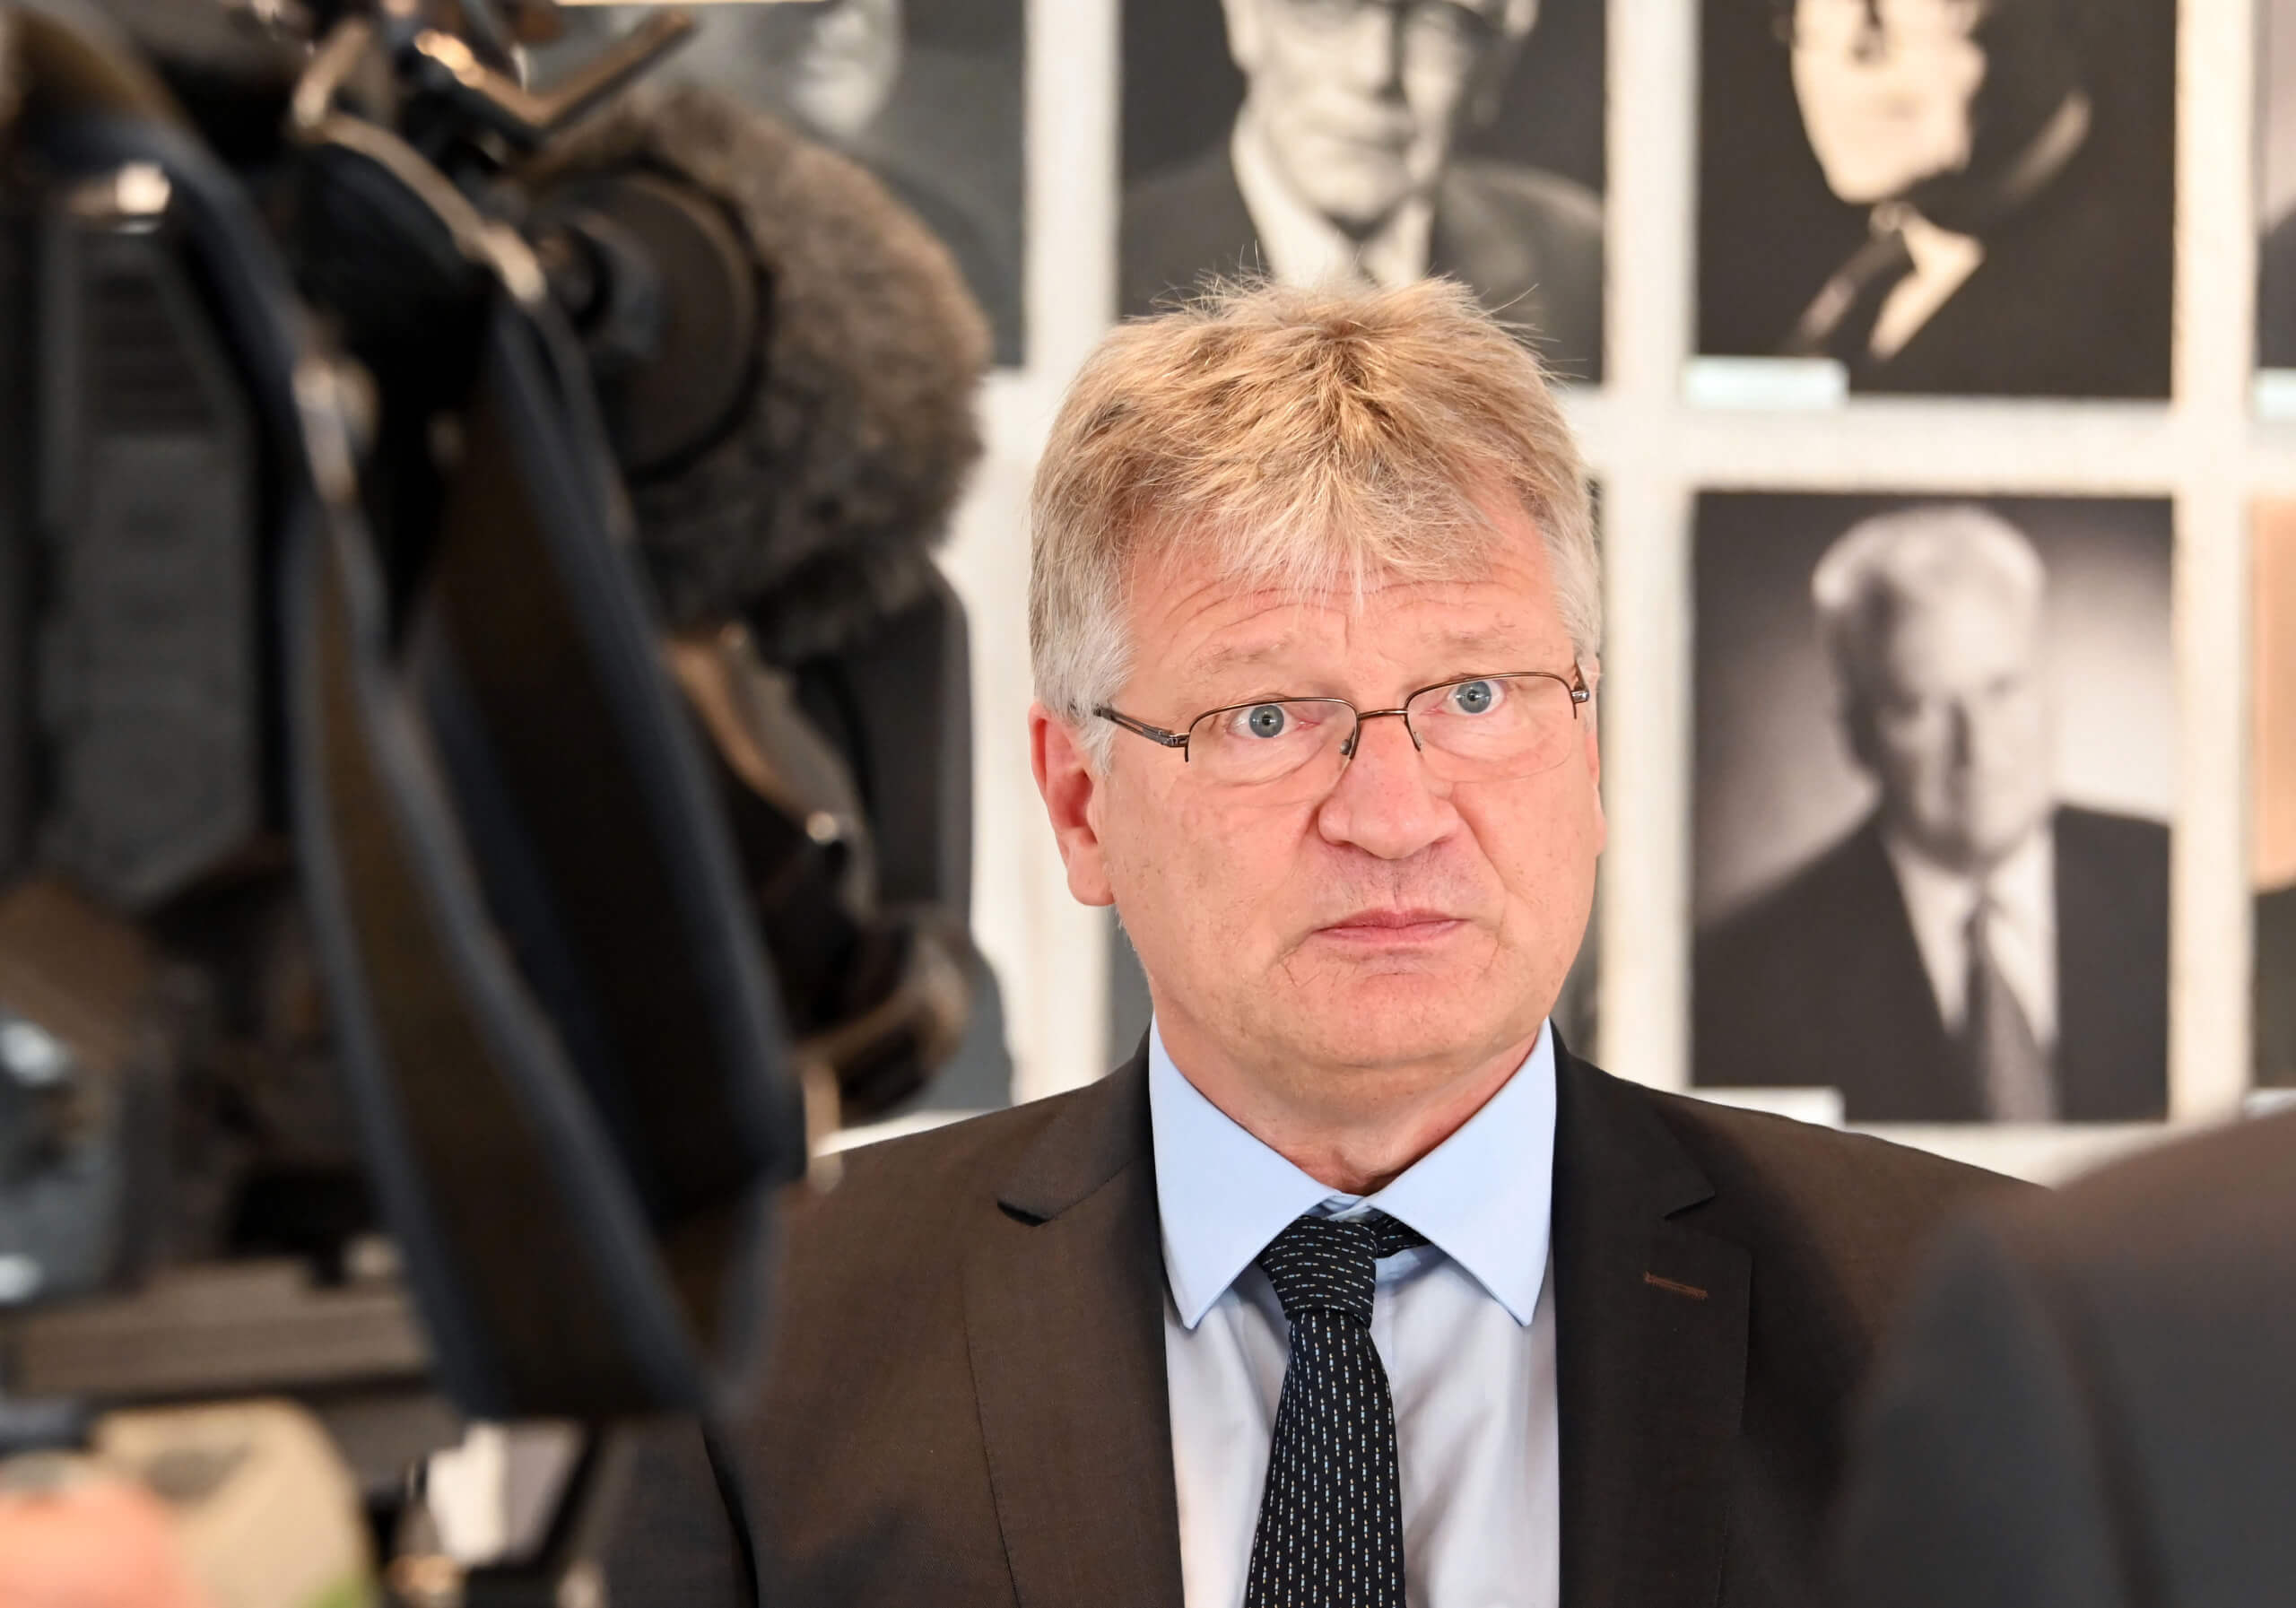 AfD-Spendenskandal: AfD-Chef Jörg Meuthen beantwortet Fragen vor Kameras. Foto: Uli Deck / picture alliance / dpa